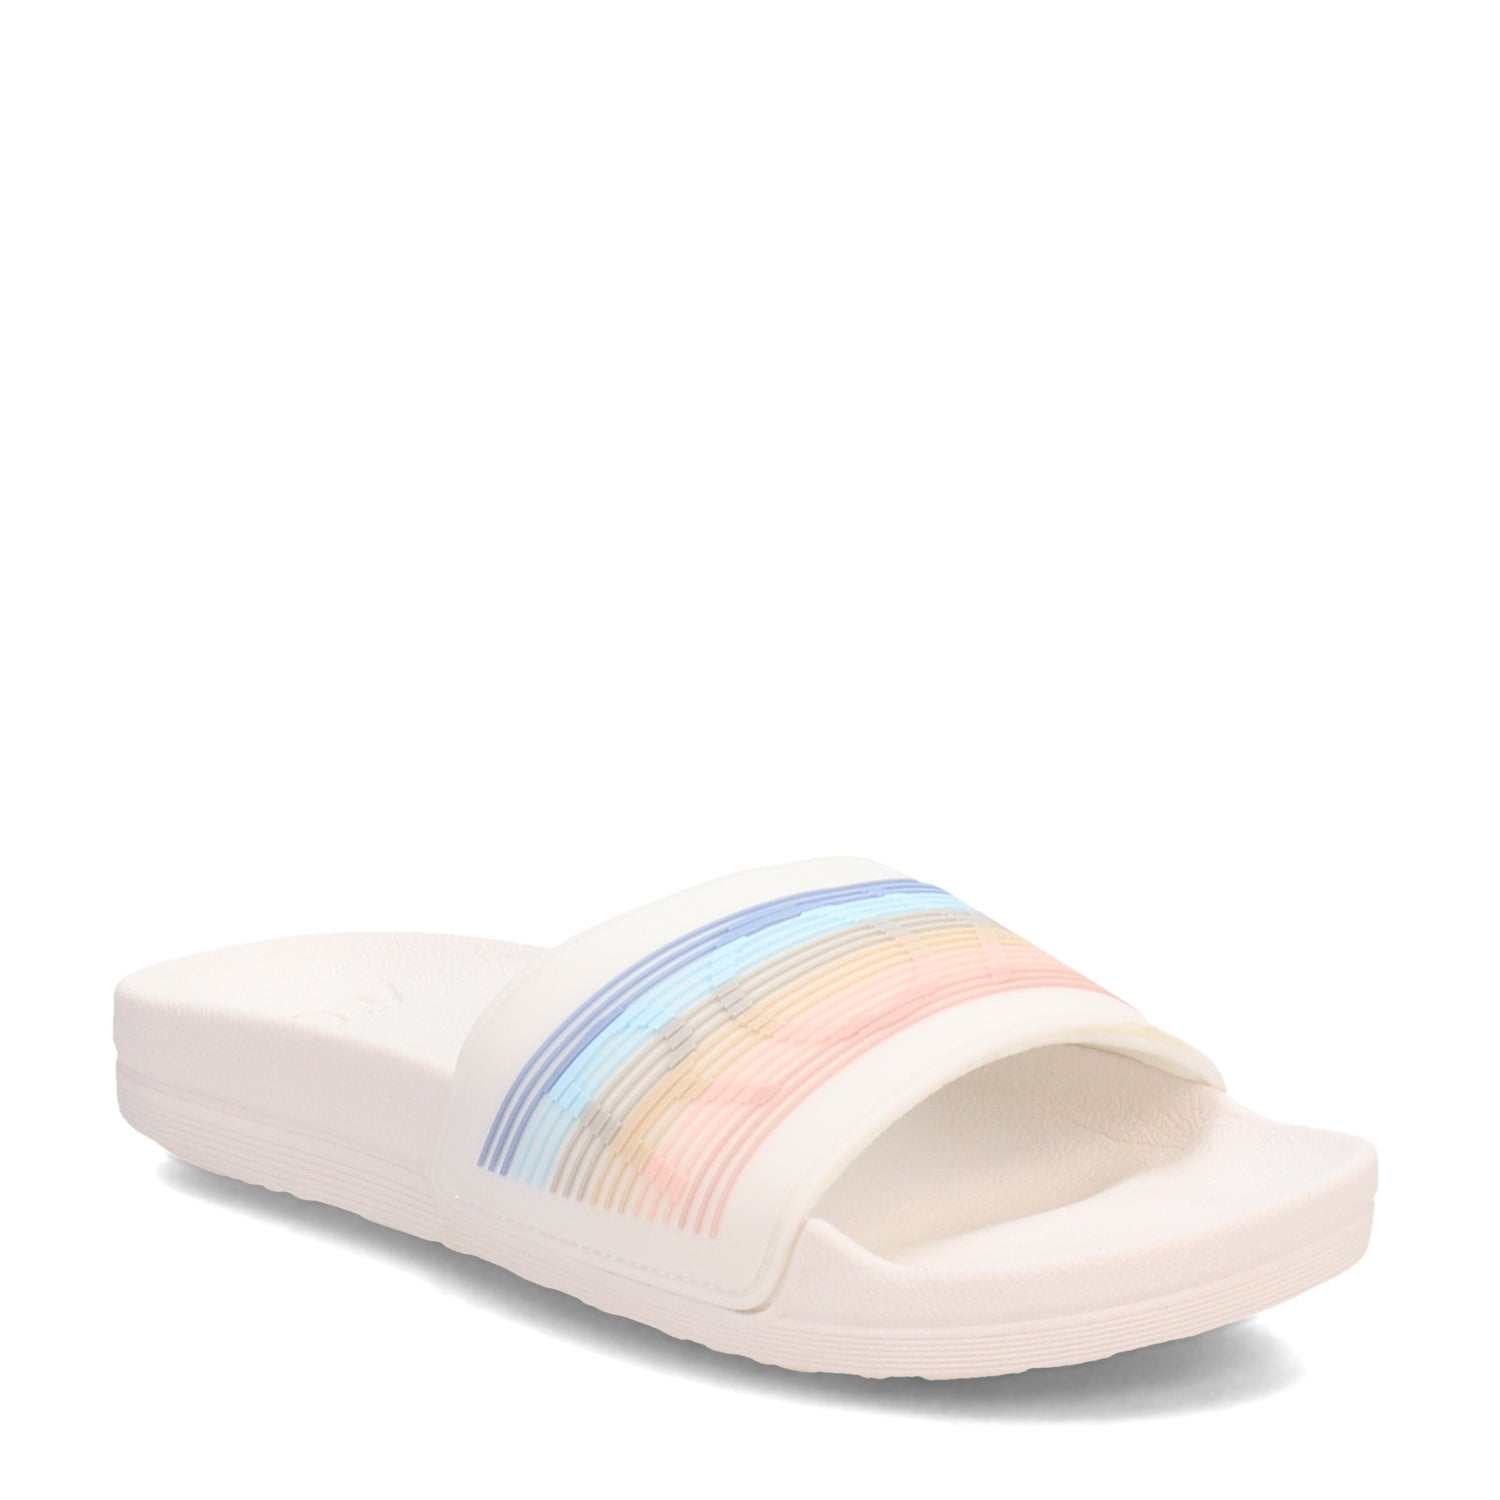 Peltz Shoes  Women's Roxy Slippy LX Sandal WHITE ARJL100977-TST